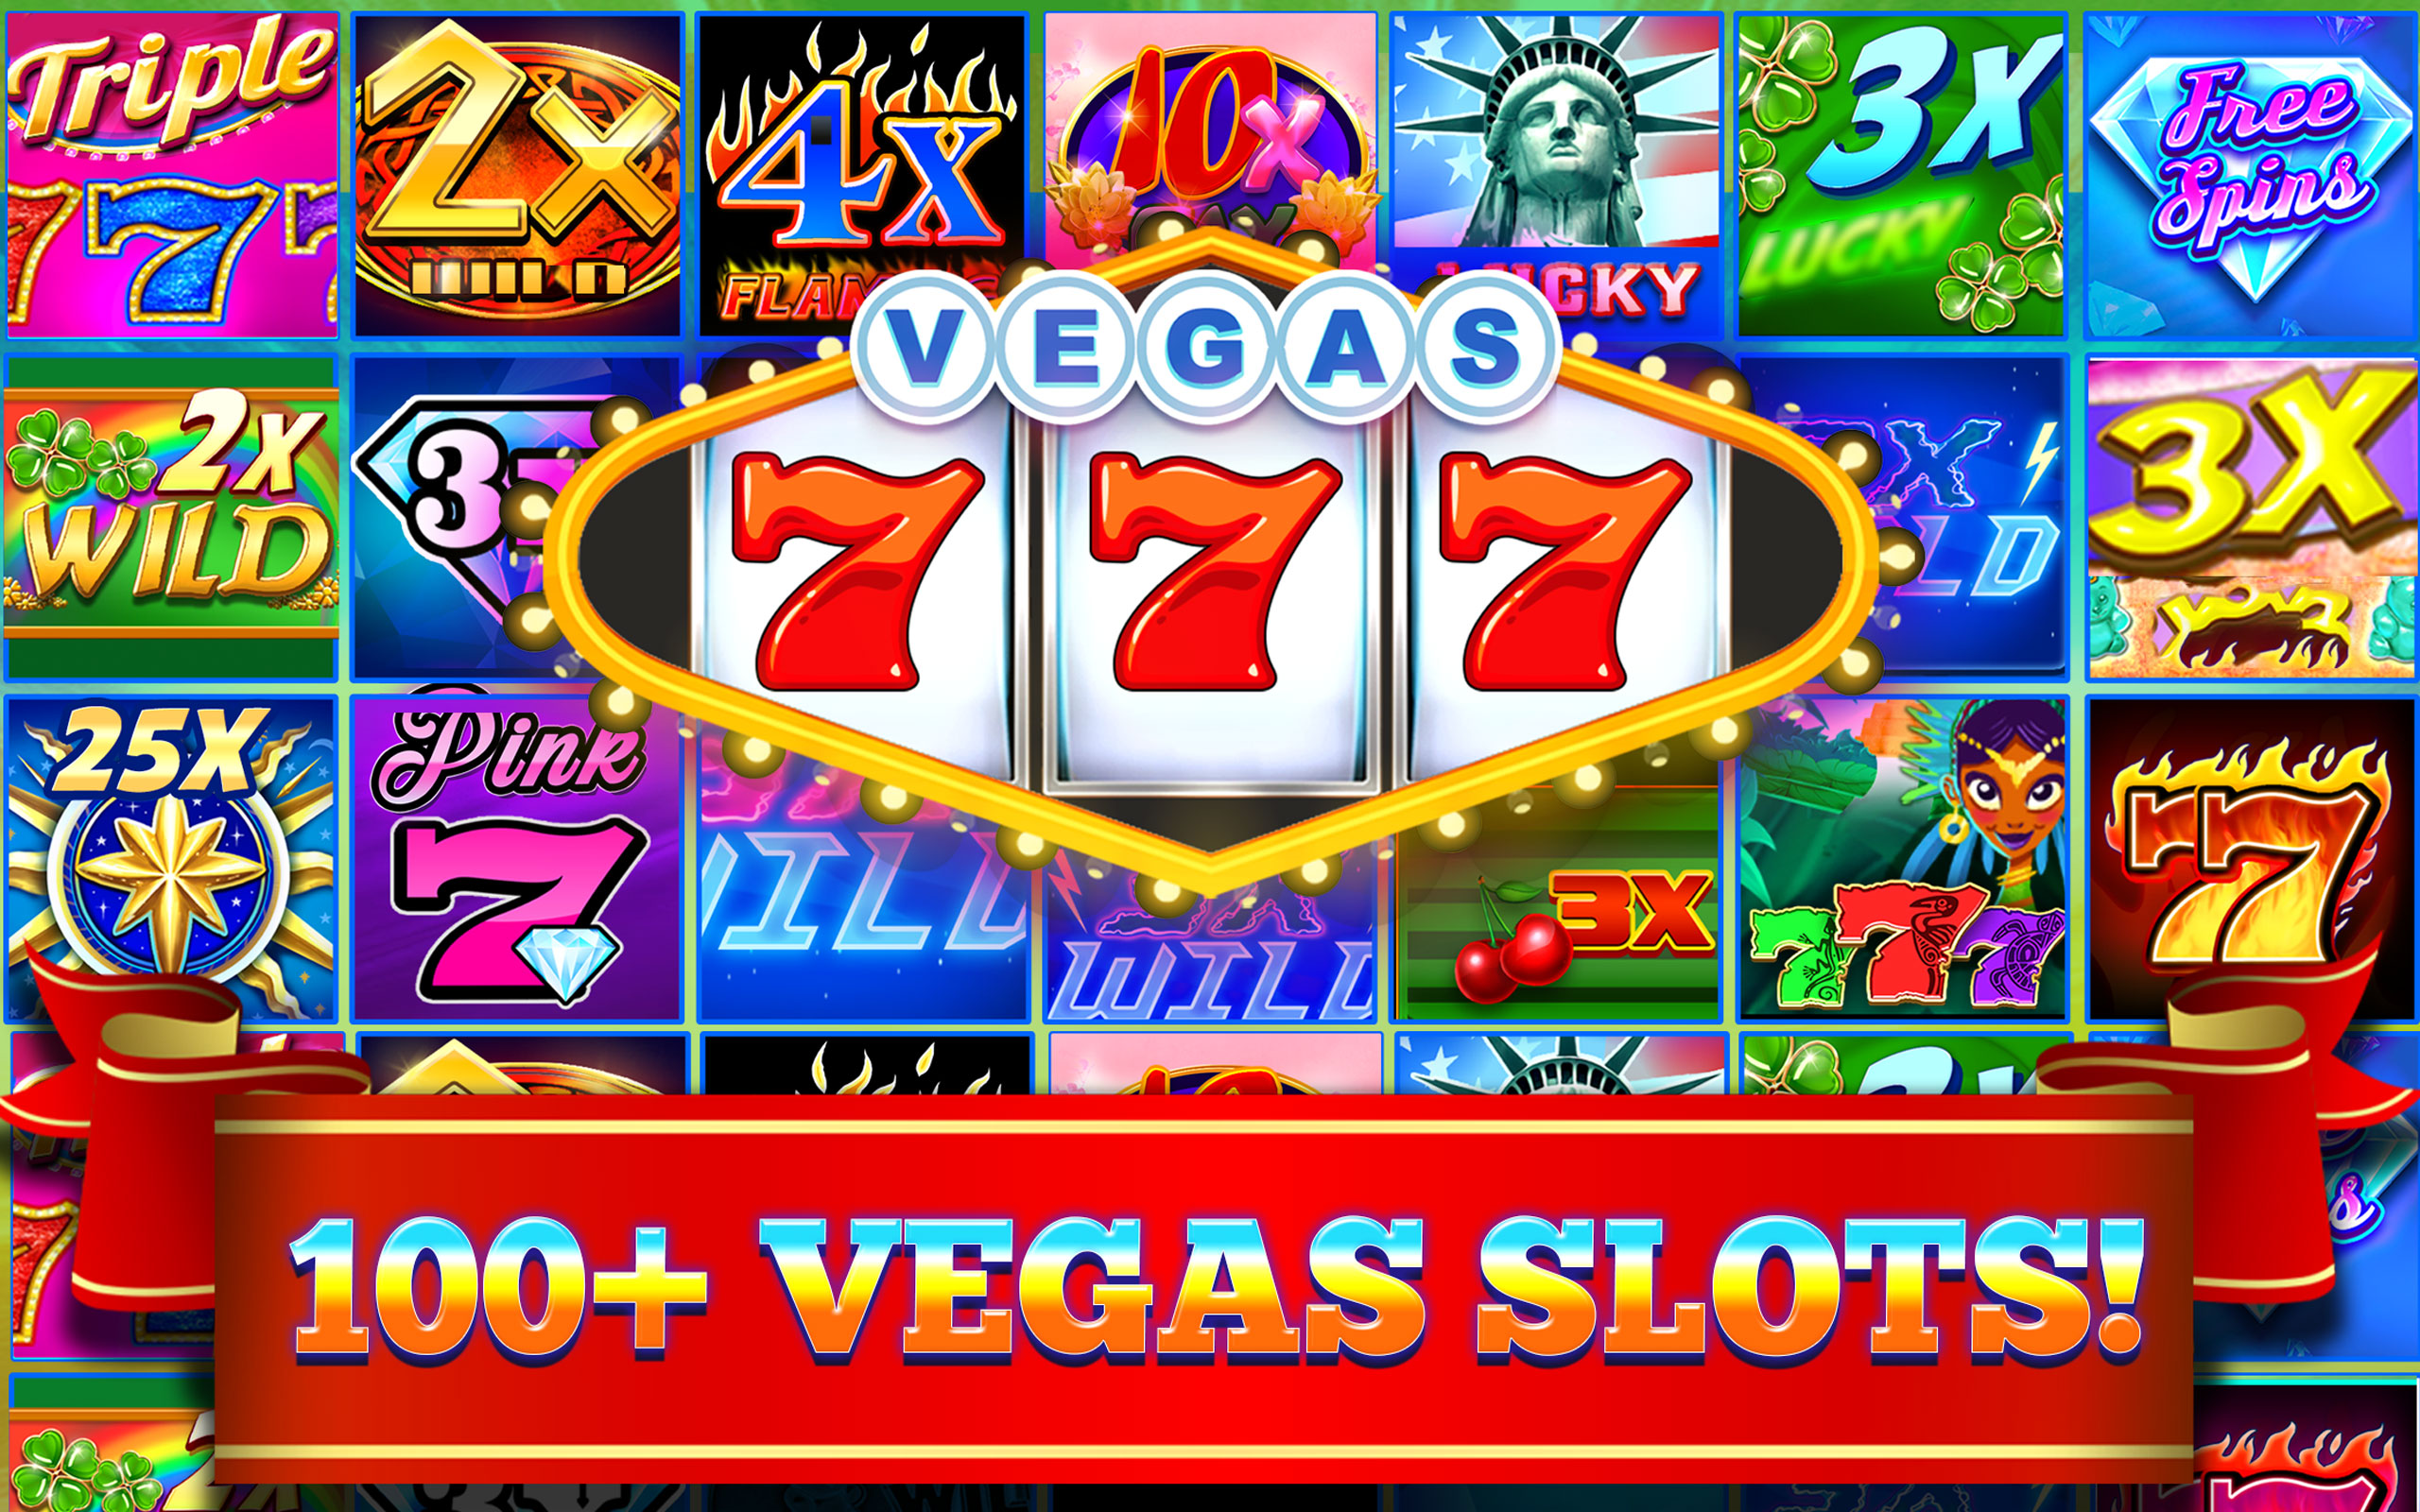 Play Online Slot Games Uk | The Best Casino Slots